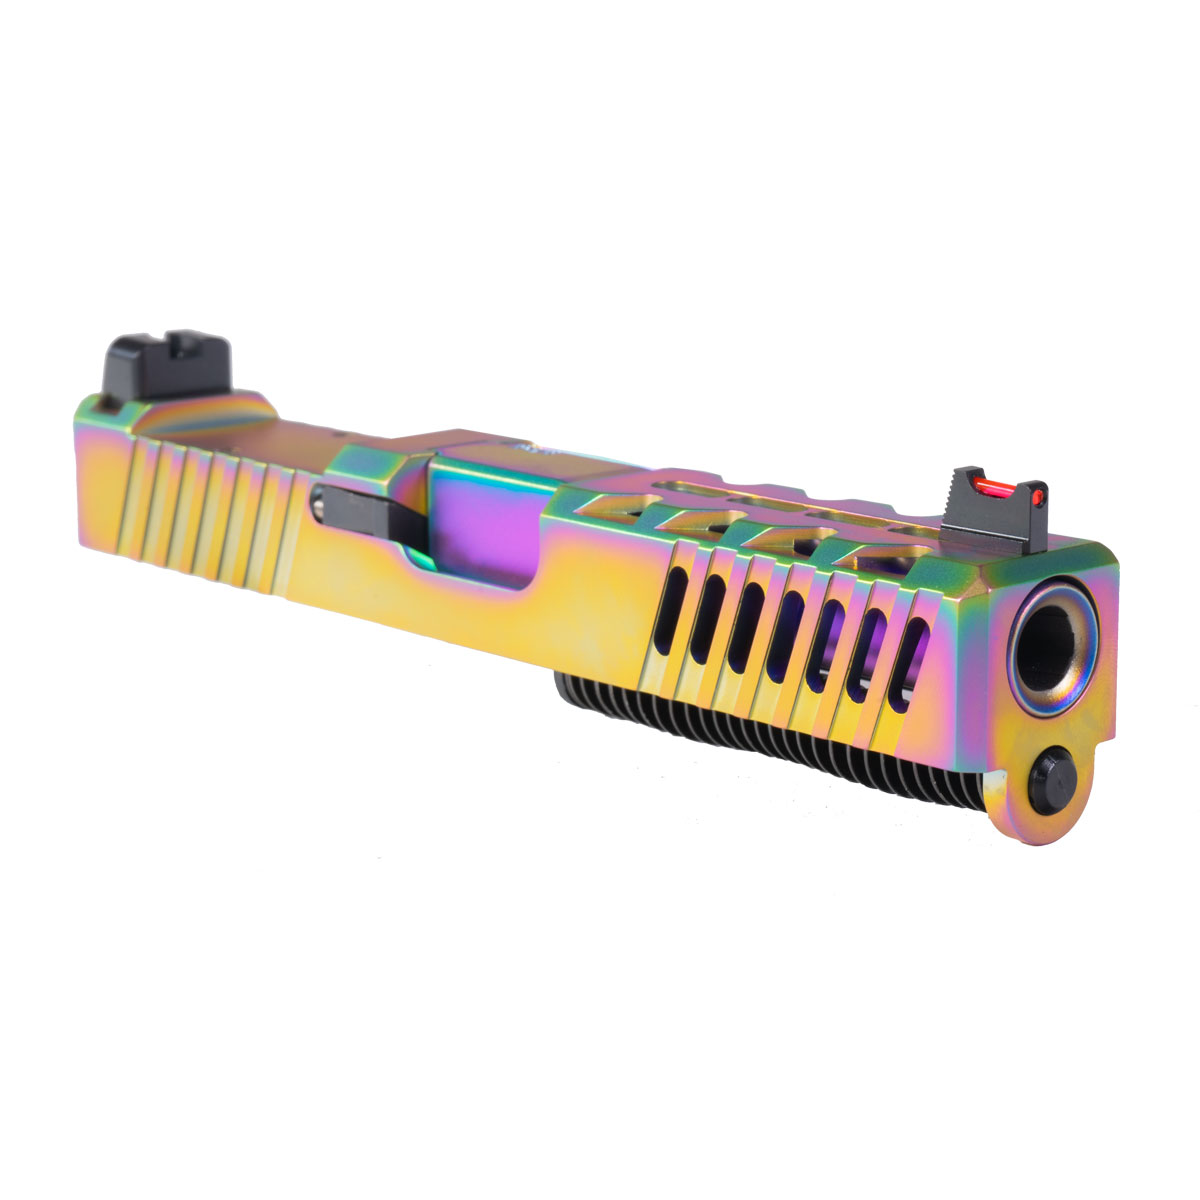 DD 'Polychrome Pursuit' 9mm Complete Slide Kit - Glock 19 Gen 1-2 Compatible